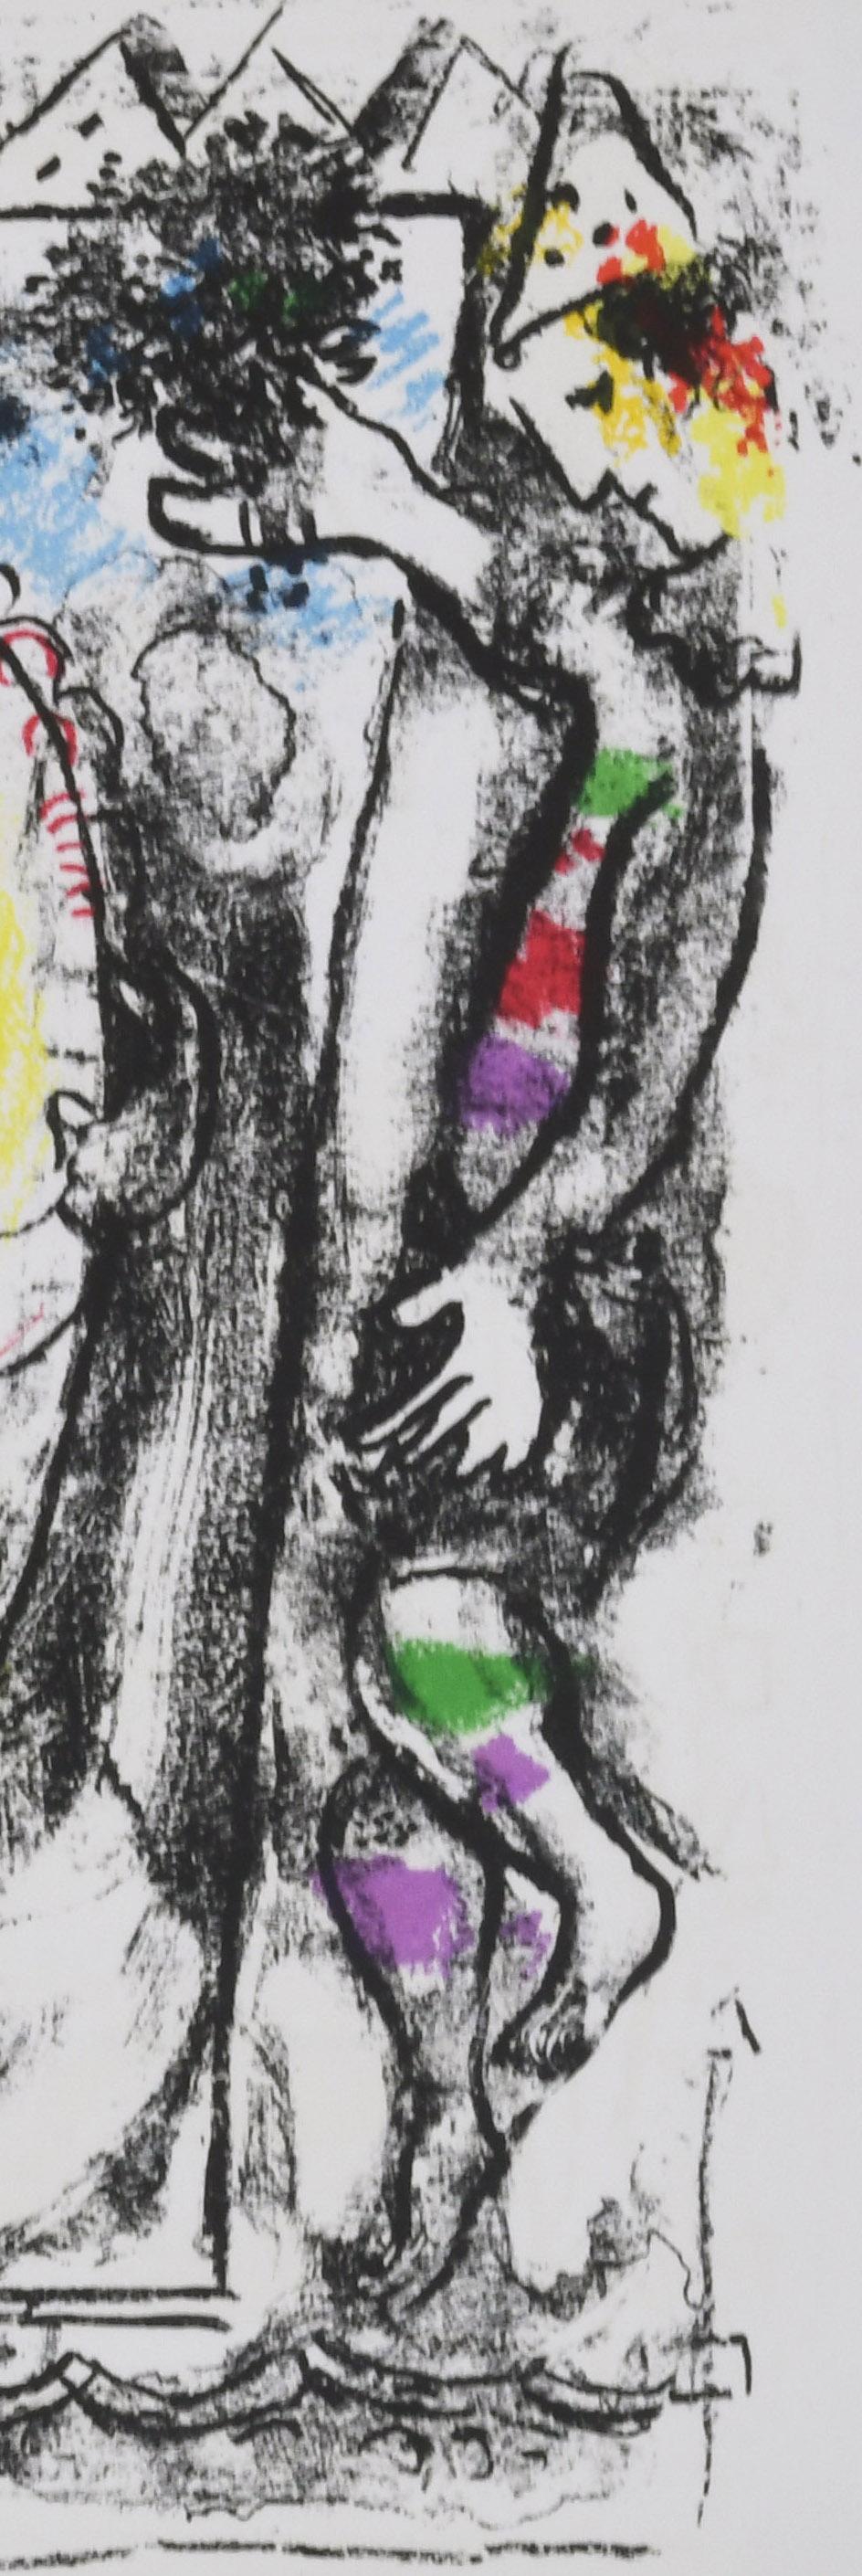 Derriere le Miroir-Double-Double- Seite (Behind the Looking Glass Double Page)
Original-Farblithogragp des Künstlers für diese Publikation, 1964
Unsigned as issued
Aus: Derriere le Miroir Chagall: Dessins et Lavis, Exposition Chagall, Galeries